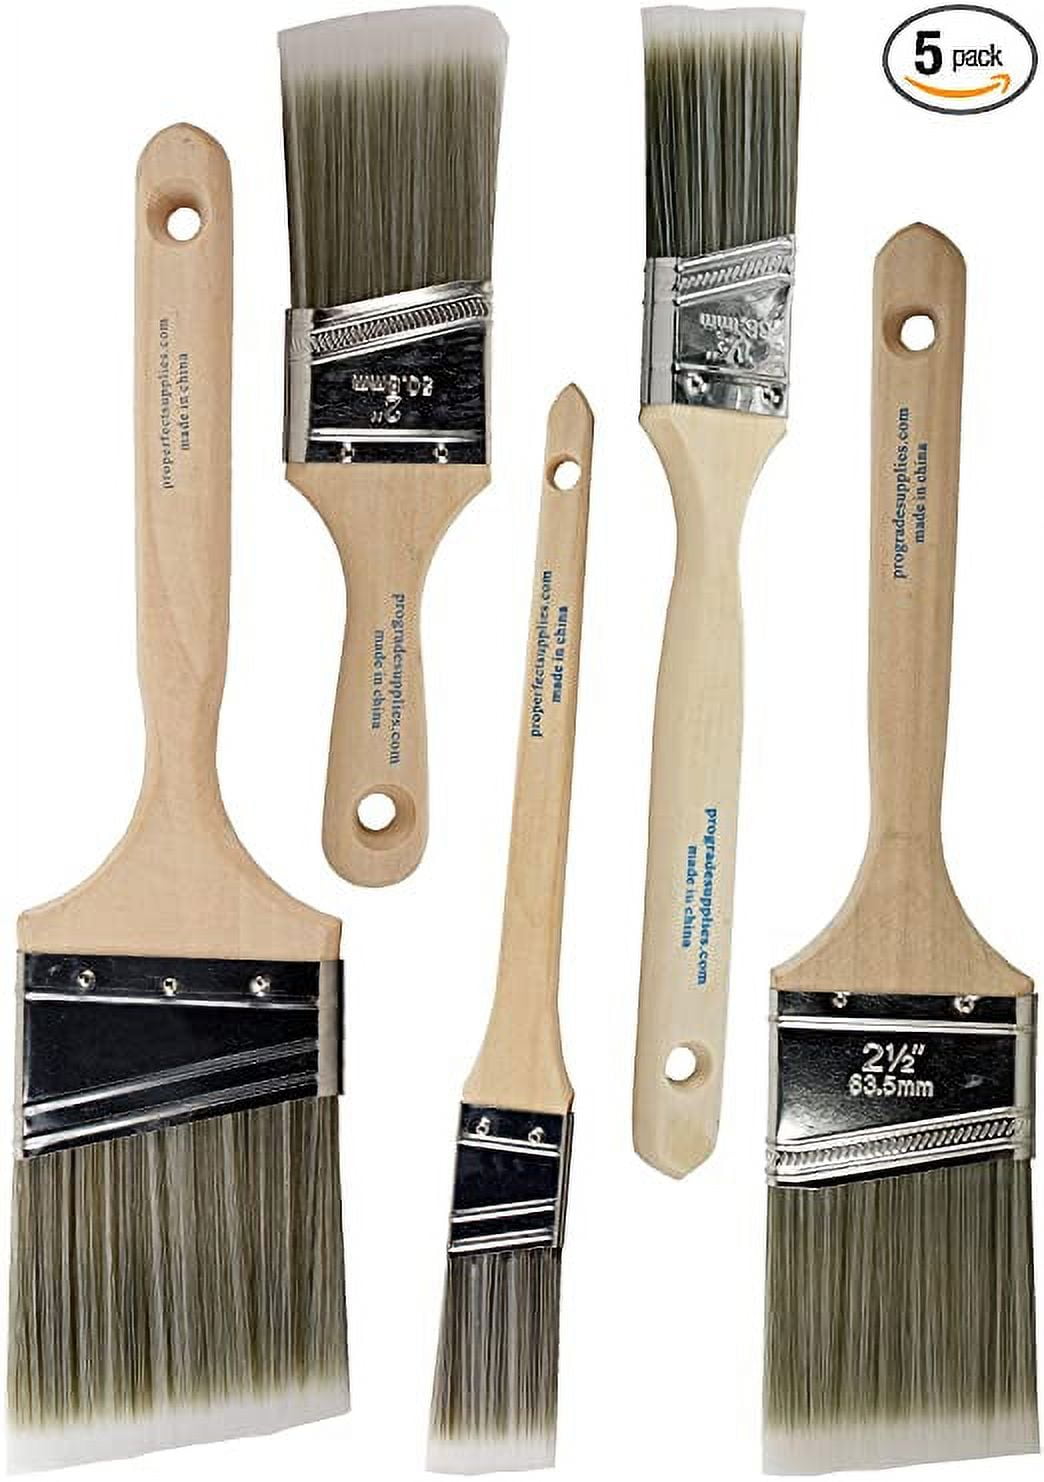 Pro Grade Chip Brush, 2 inch Professional Paint Brushes, 12 Pack Natural  China Bristle Paintbrush Set